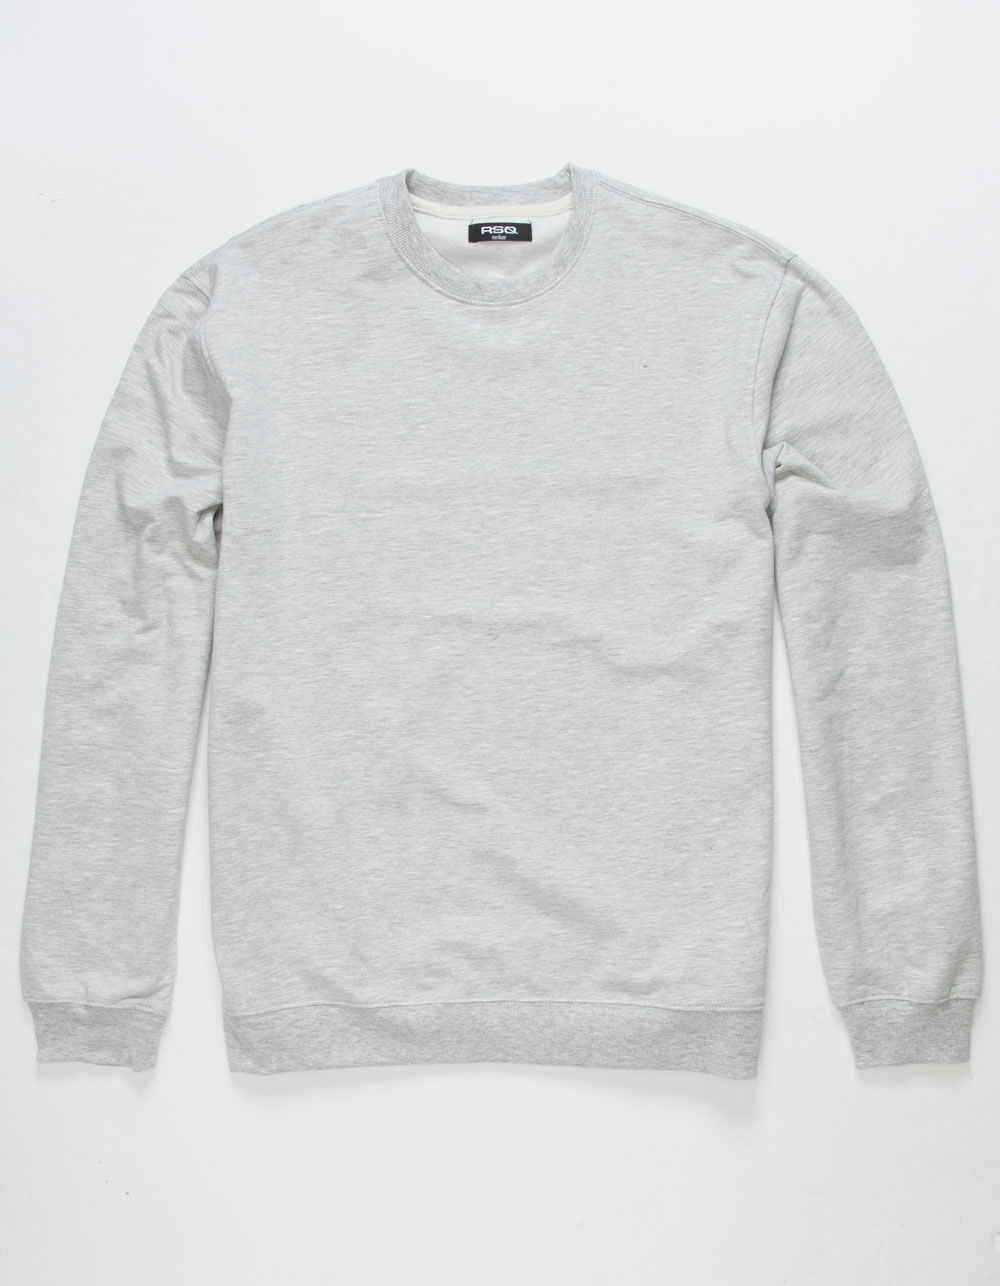  LLDYYDS Grey Men's Sweaters Sweatshirt Loose Fit